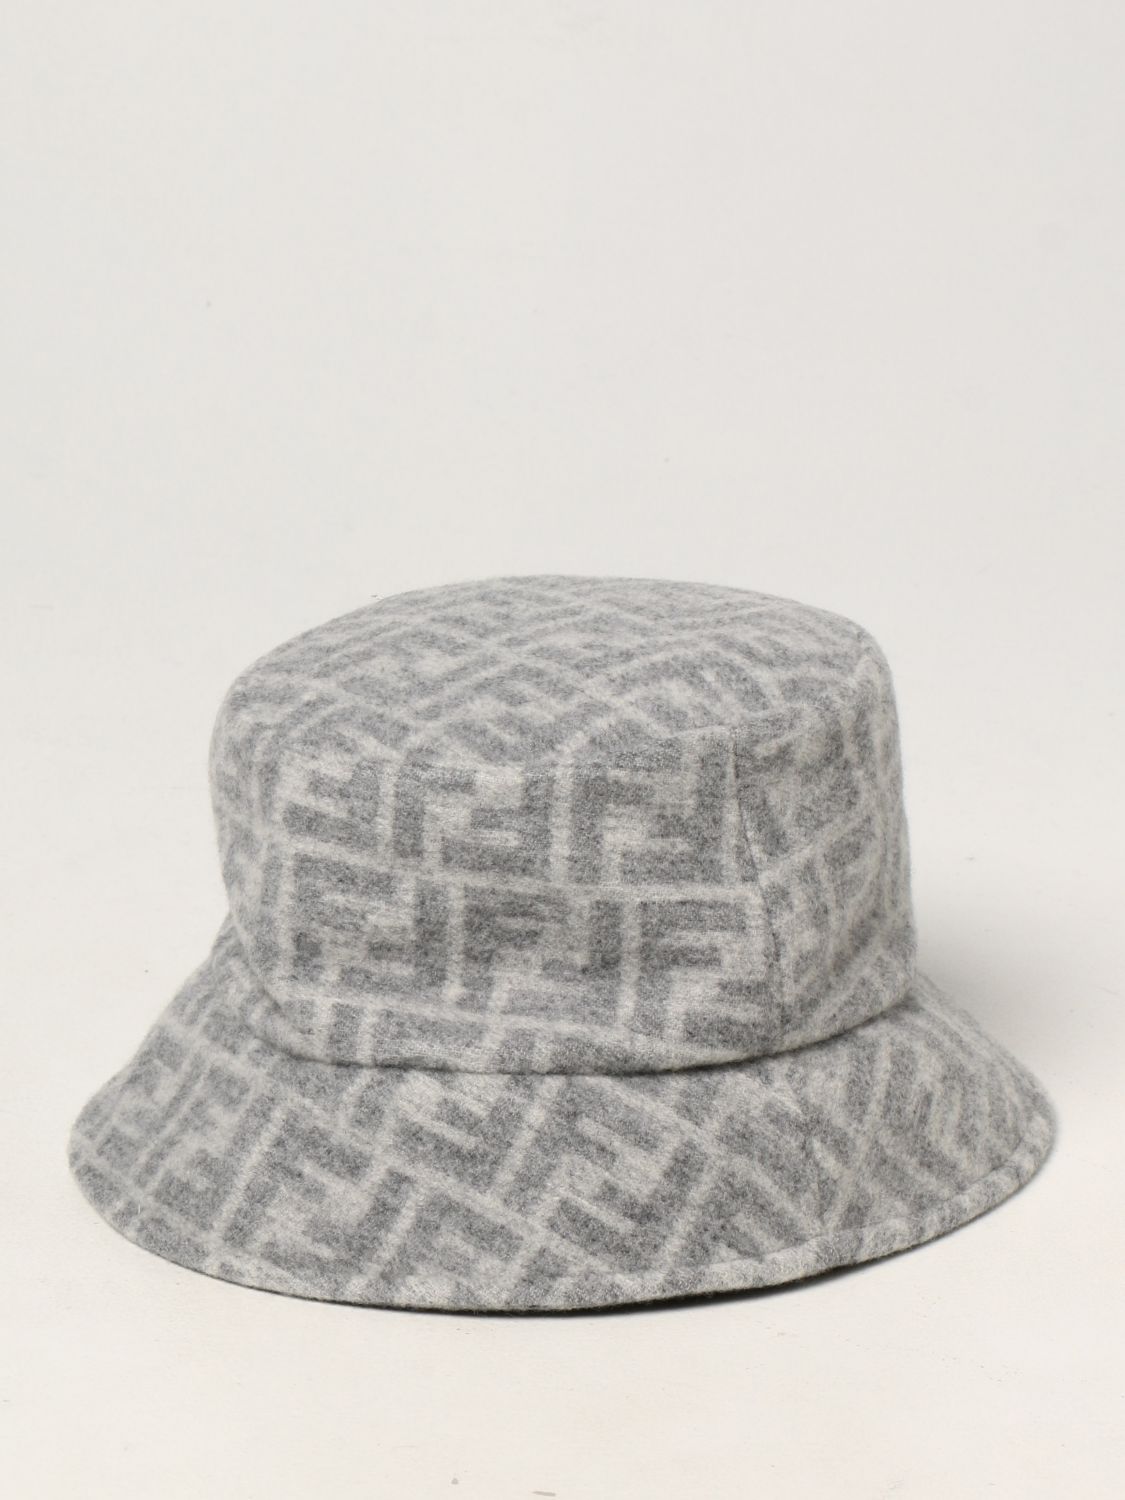 FENDI: fisherman hat with all over logo - Grey | Fendi hat FXQ813 AALR ...